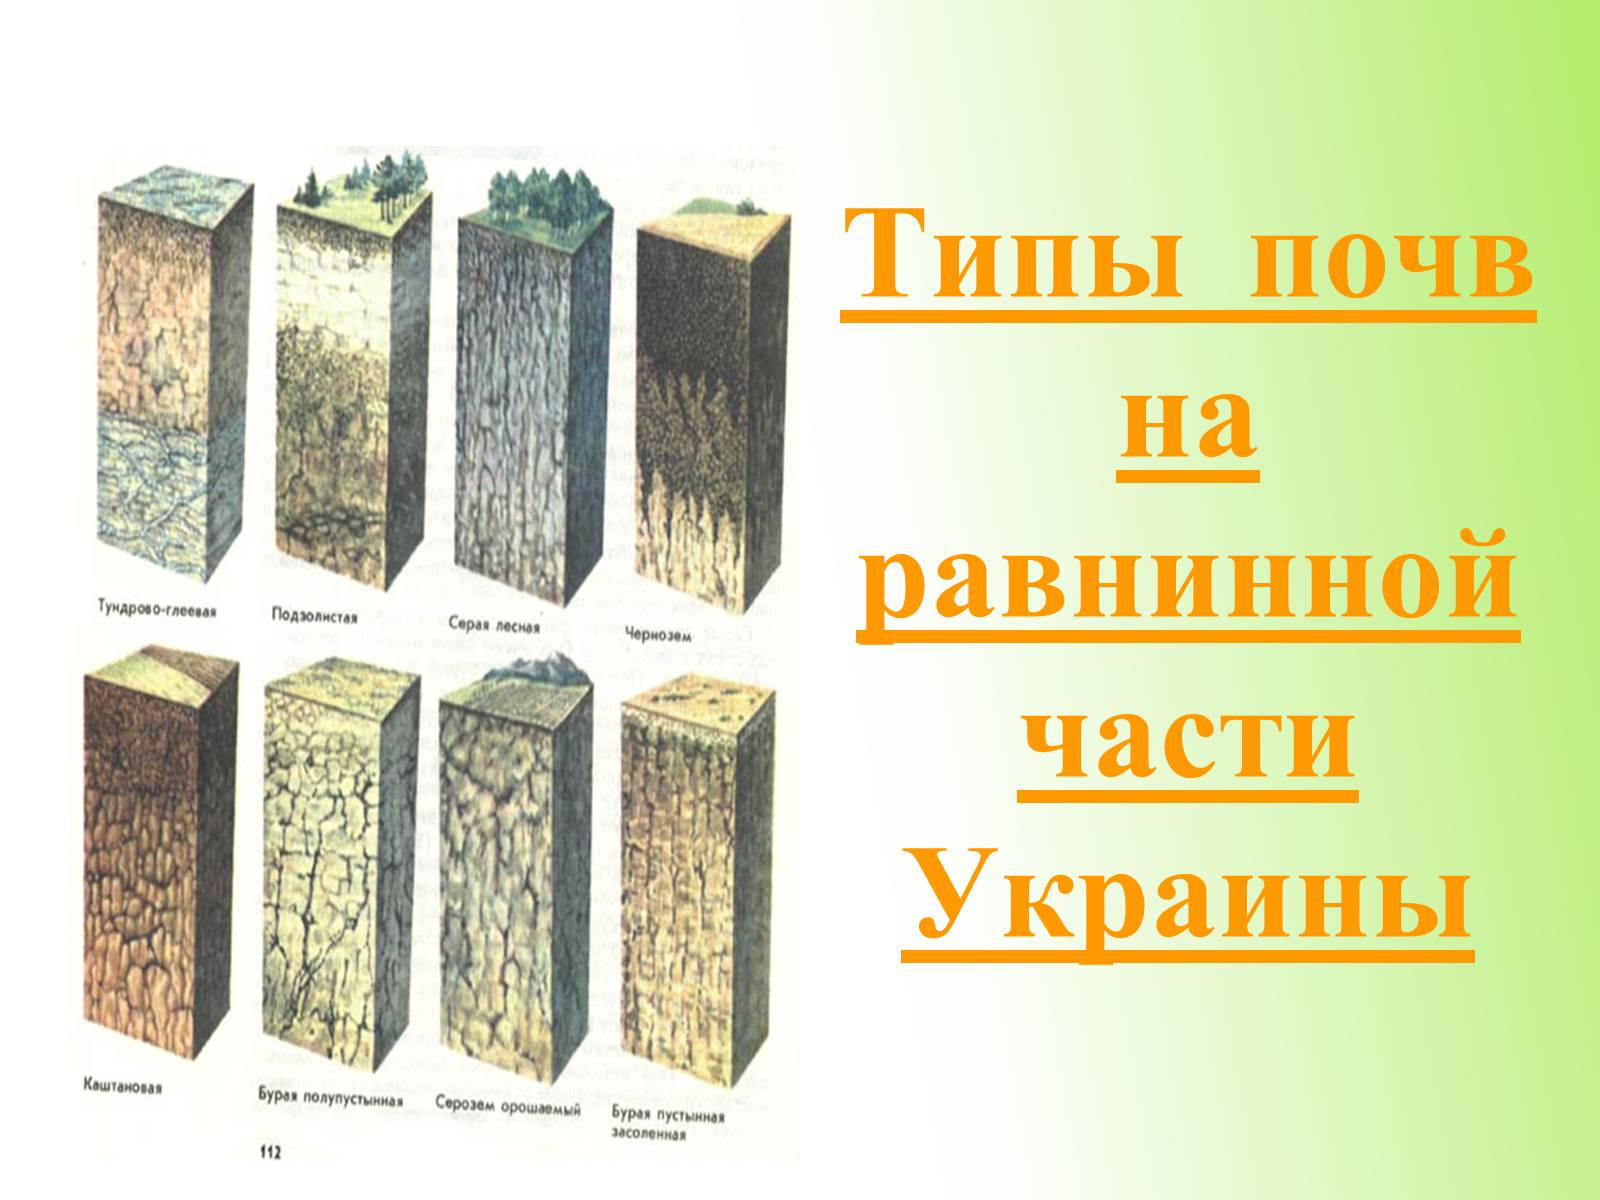 Презентація на тему «Почвы Украины» - Слайд #13